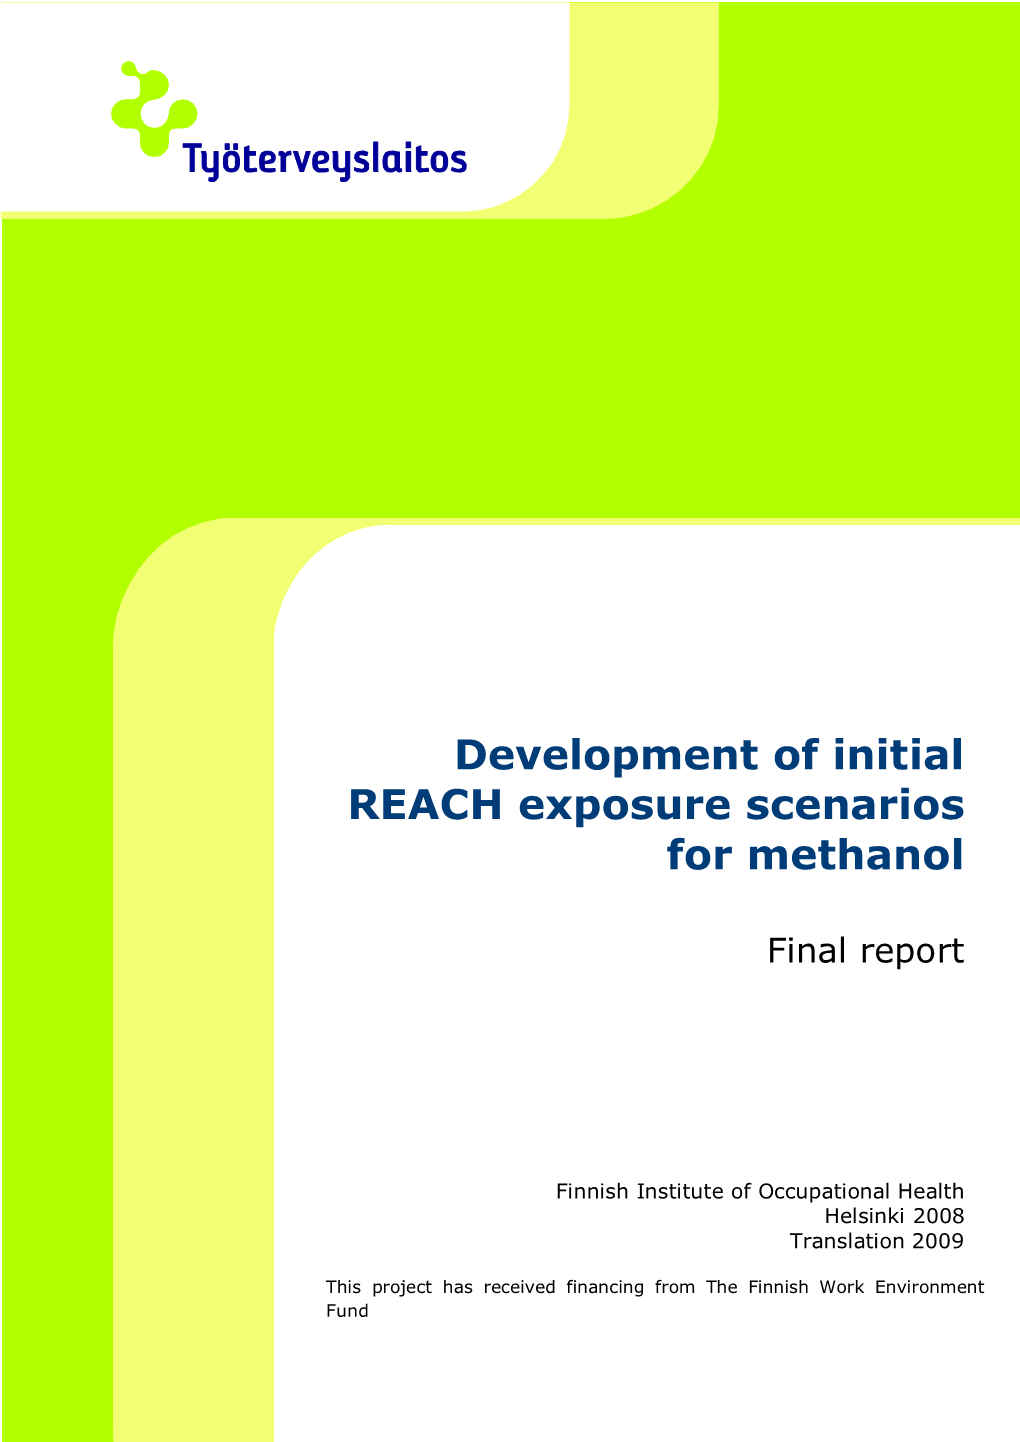 Development of Initial REACH Exposure Scenarios for Methanol